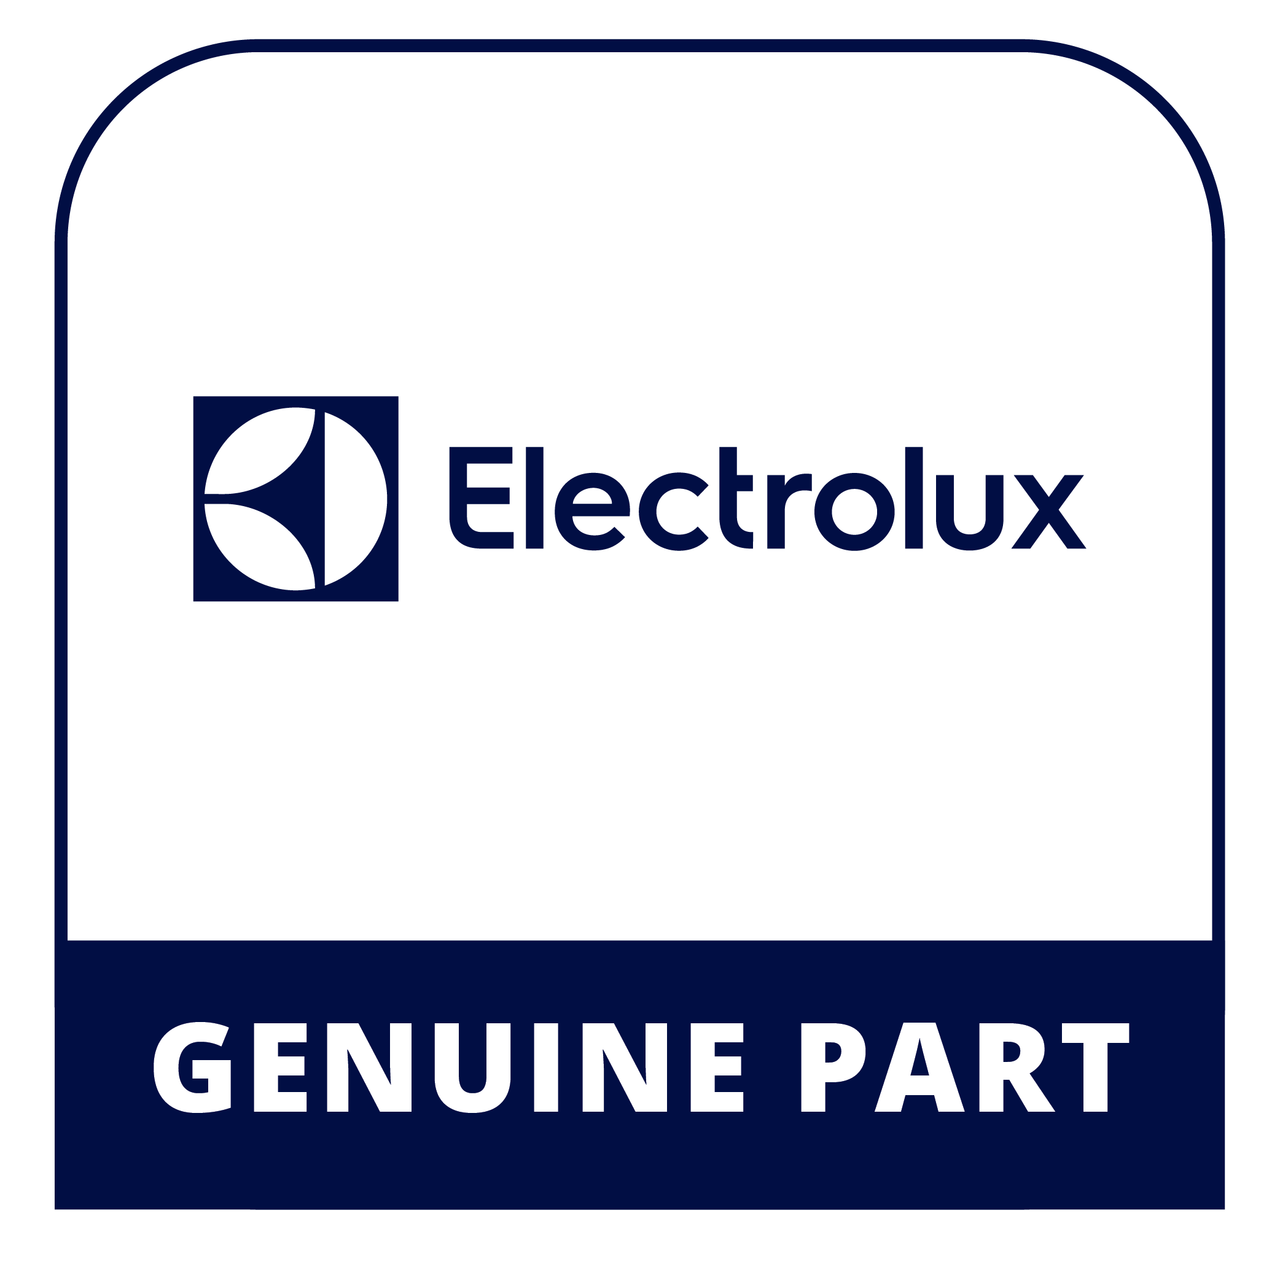 Frigidaire - Electrolux 5304516009 Installation Kit - Genuine Electrolux Part